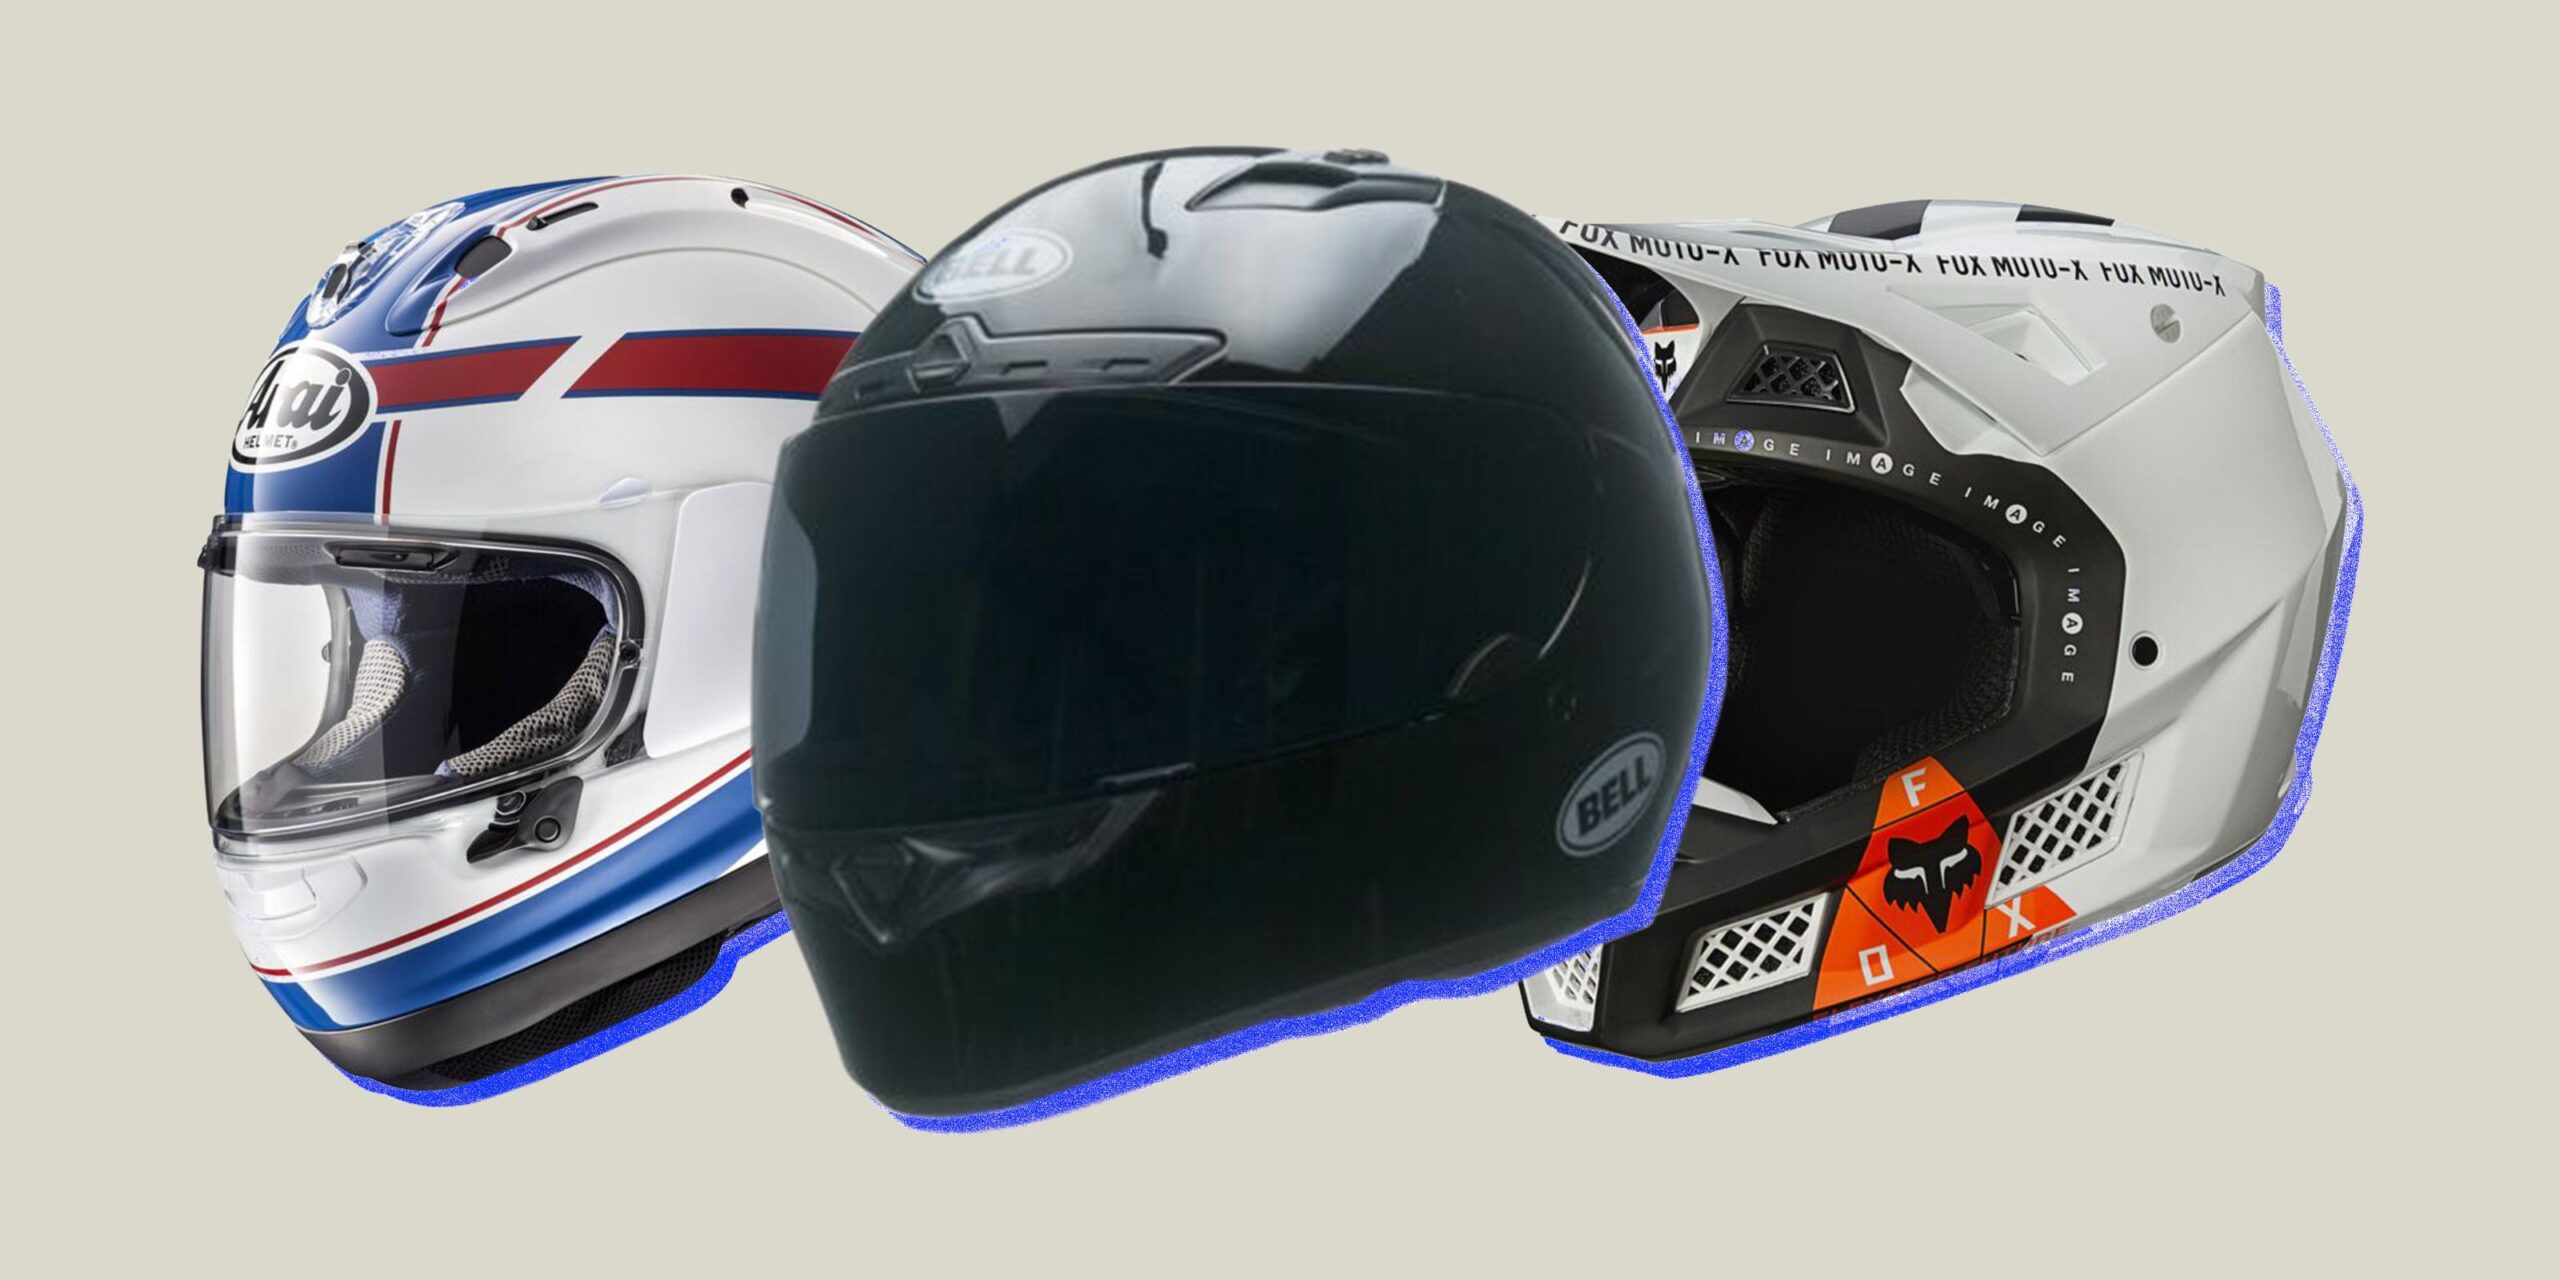 Road King RKCB: The Best Motorcycle Helmet for Commuters